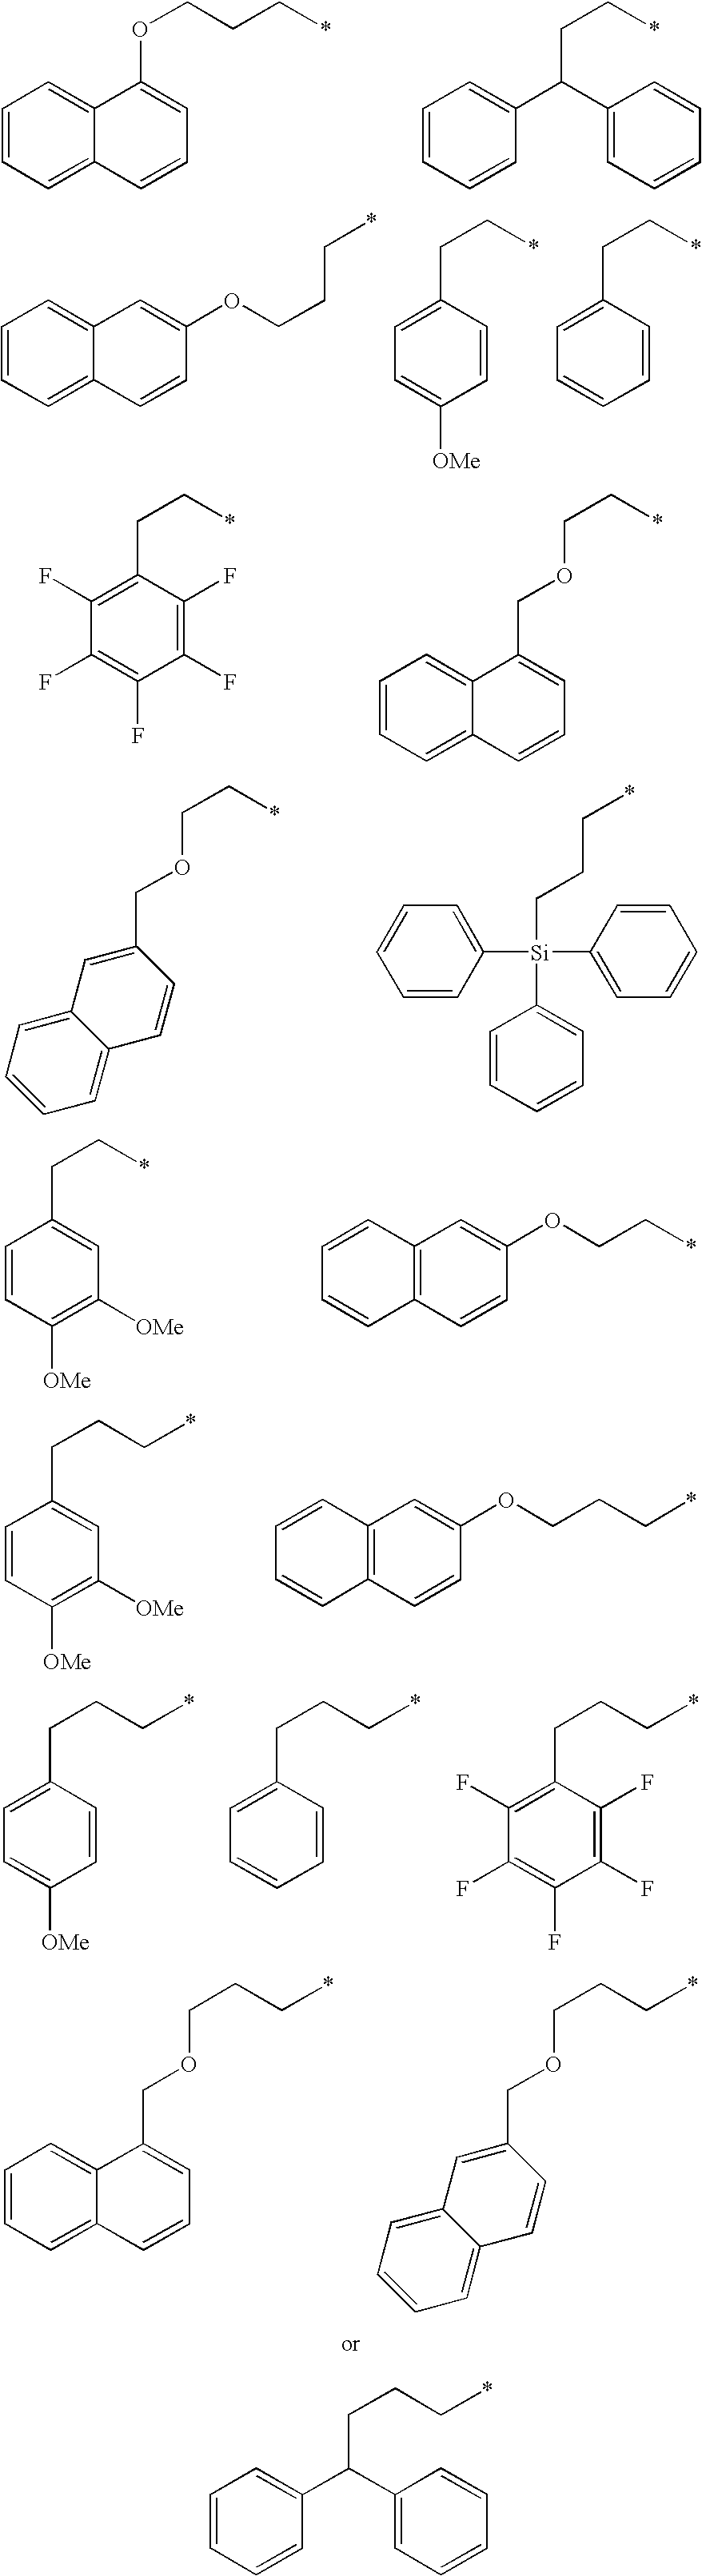 High refractive index aromatic-based siloxane monofunctional macromonomers